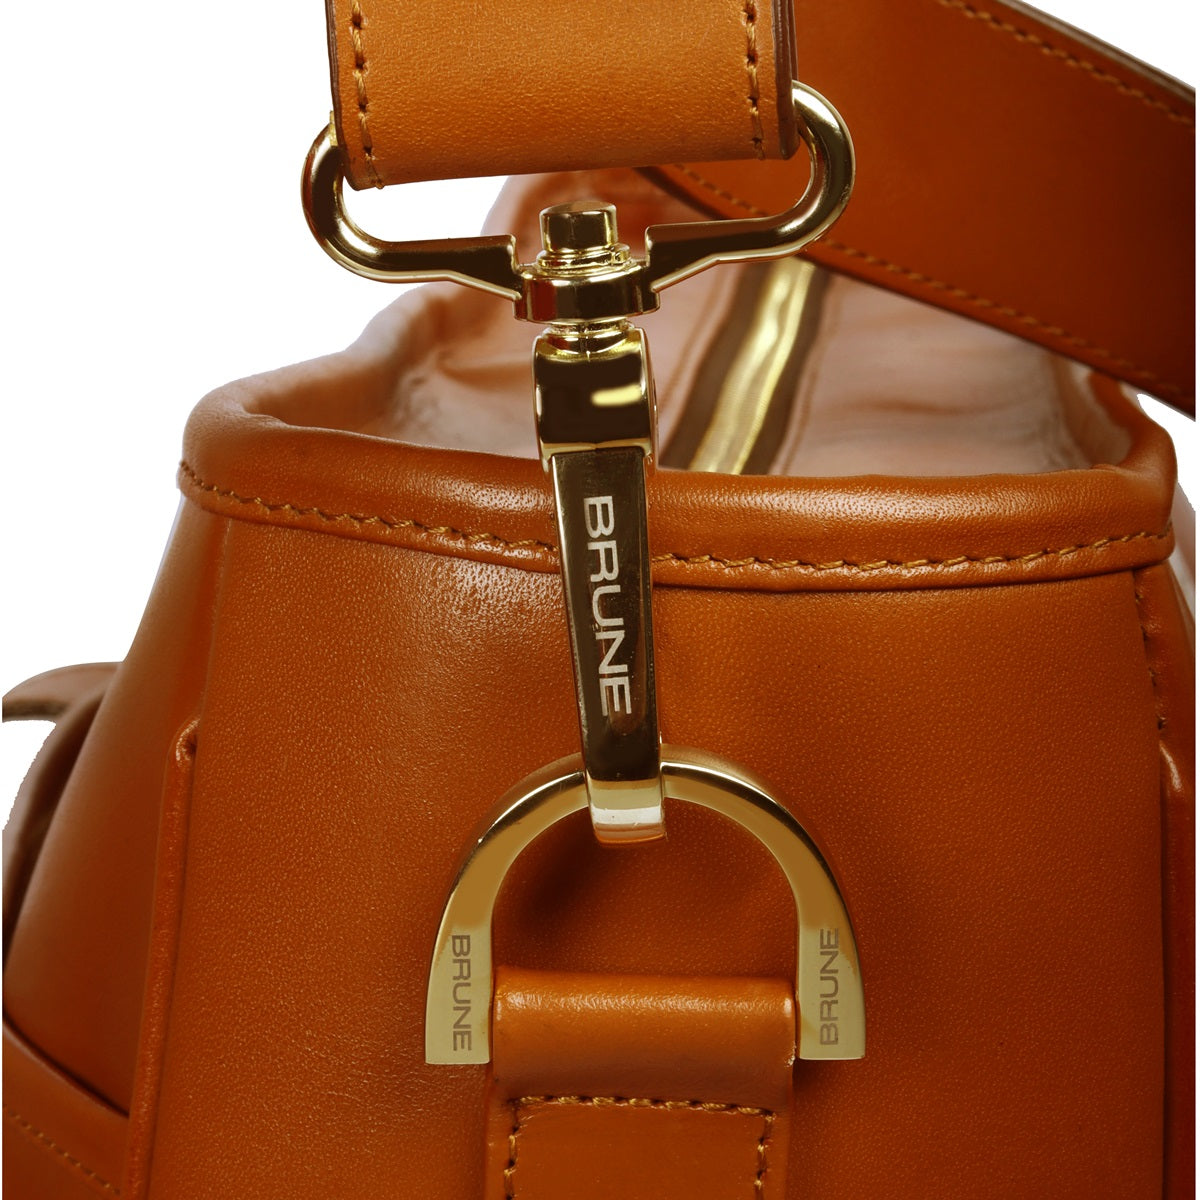 Detachable Strap Full-Length Exterior Pockets Zip Compartment Tan Leat